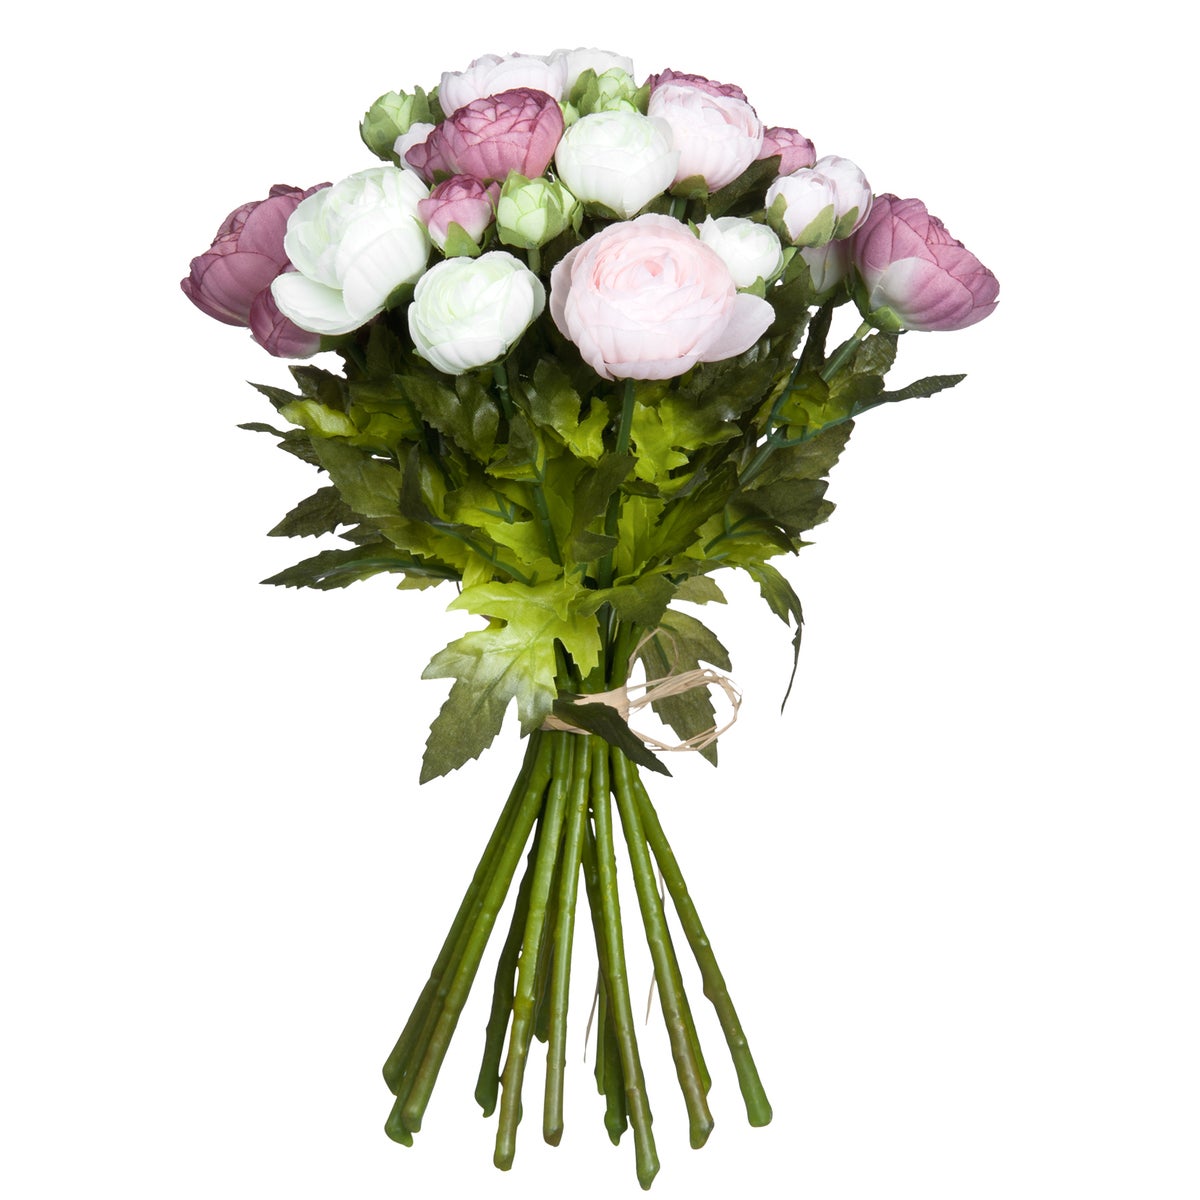 Bouquet ranunculus pink - 13.75x10.25"